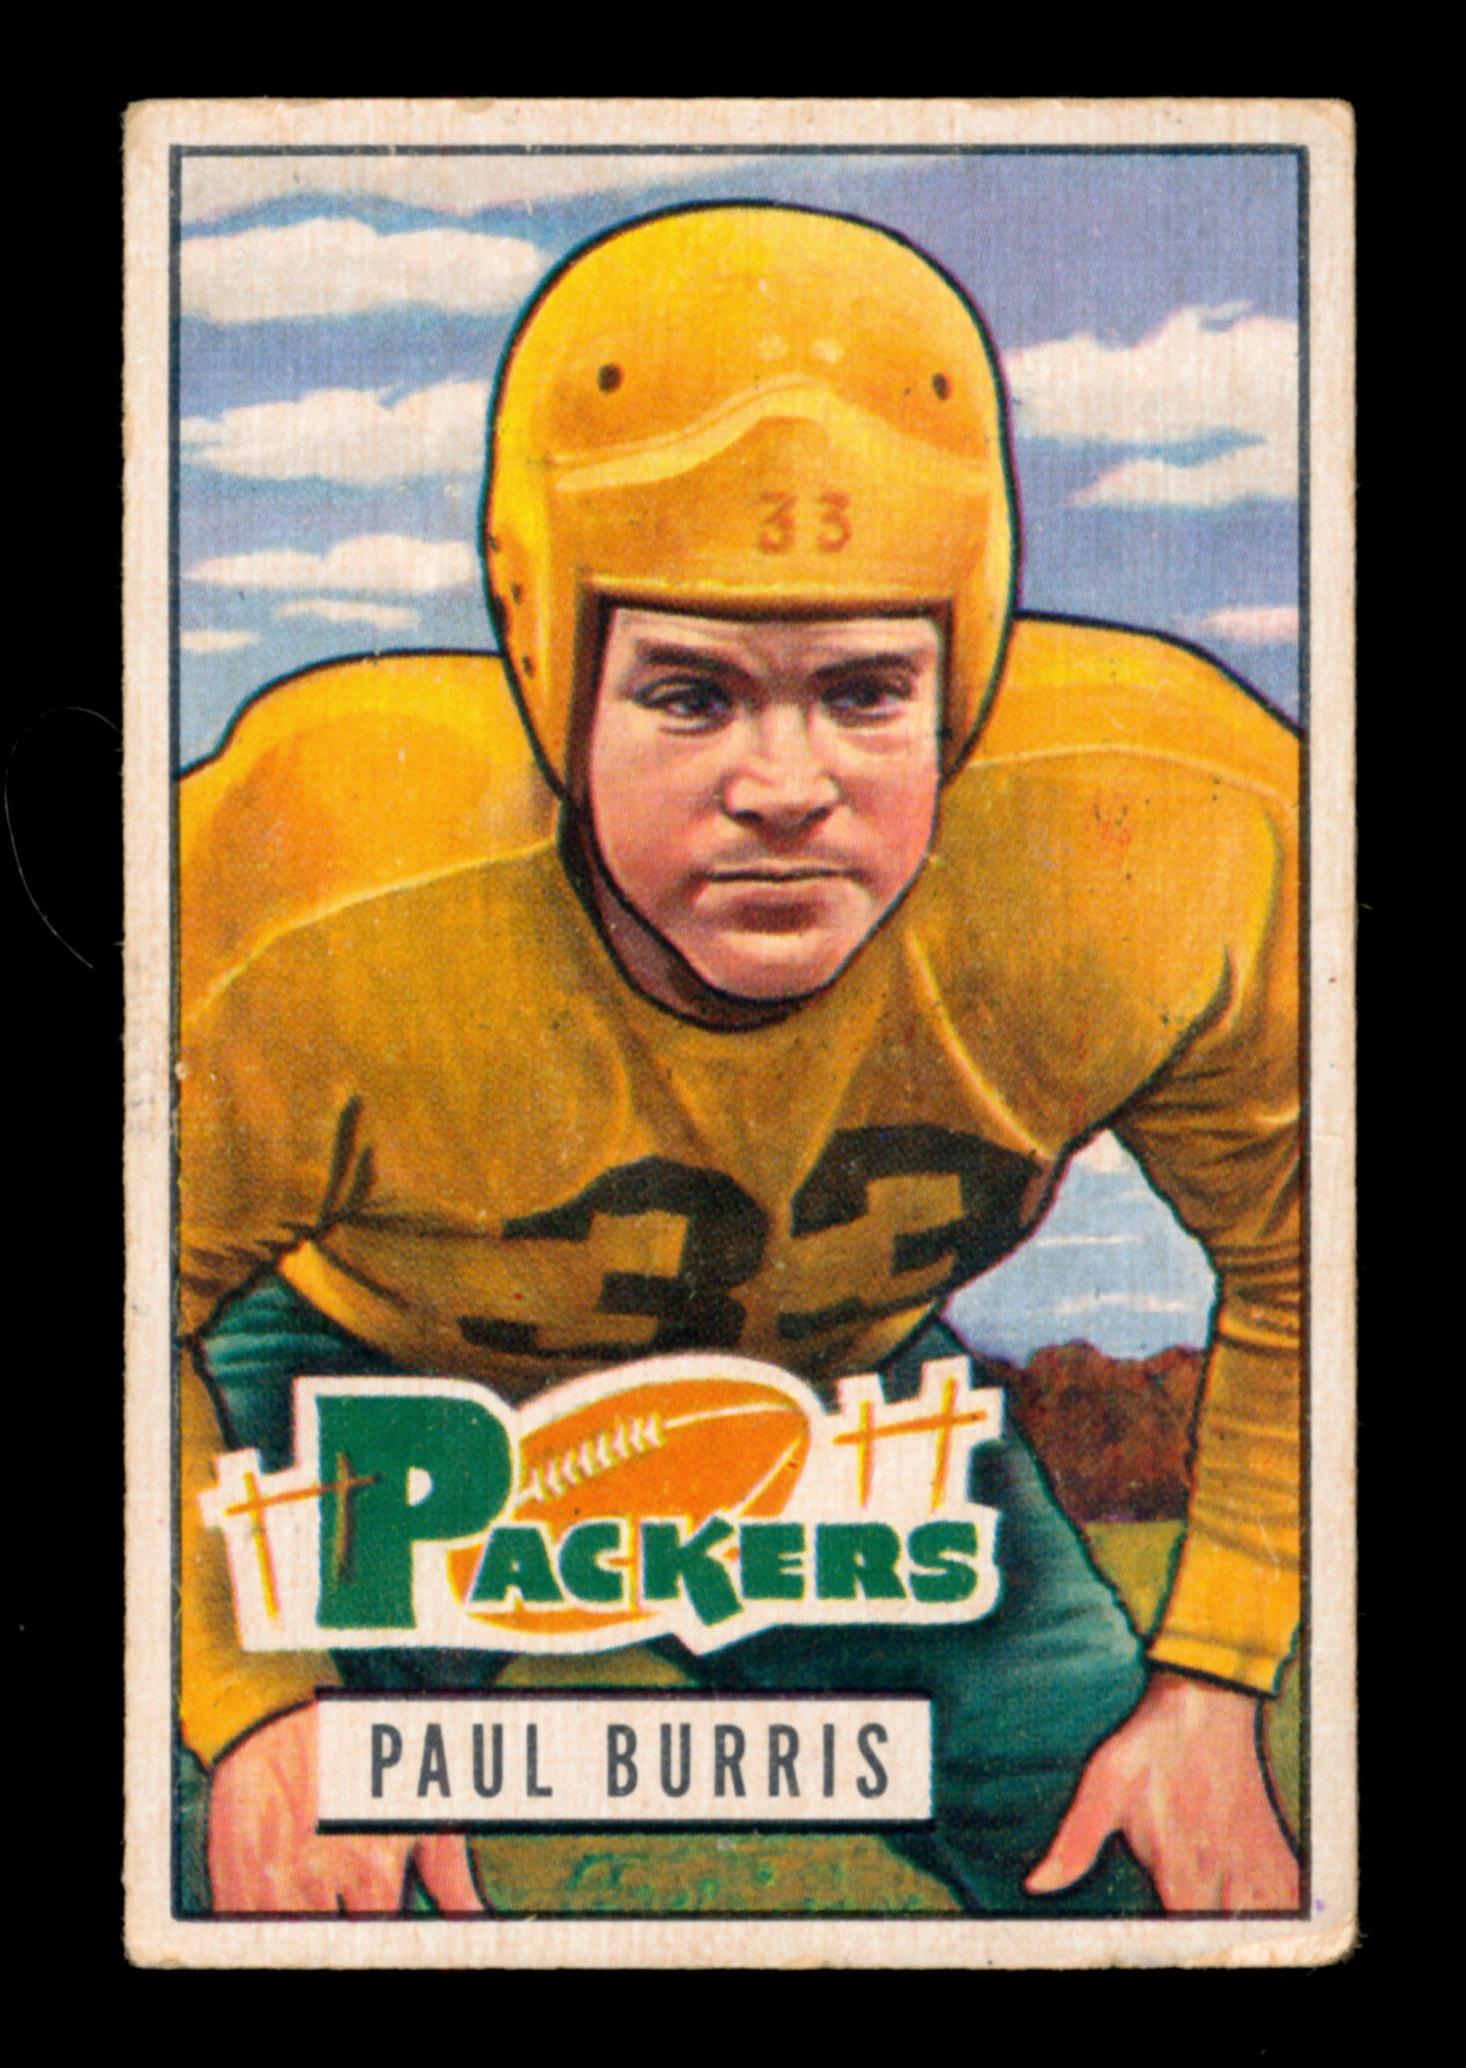 1951 Bowman Football Card #89 Paul Burris Green Bay Packers